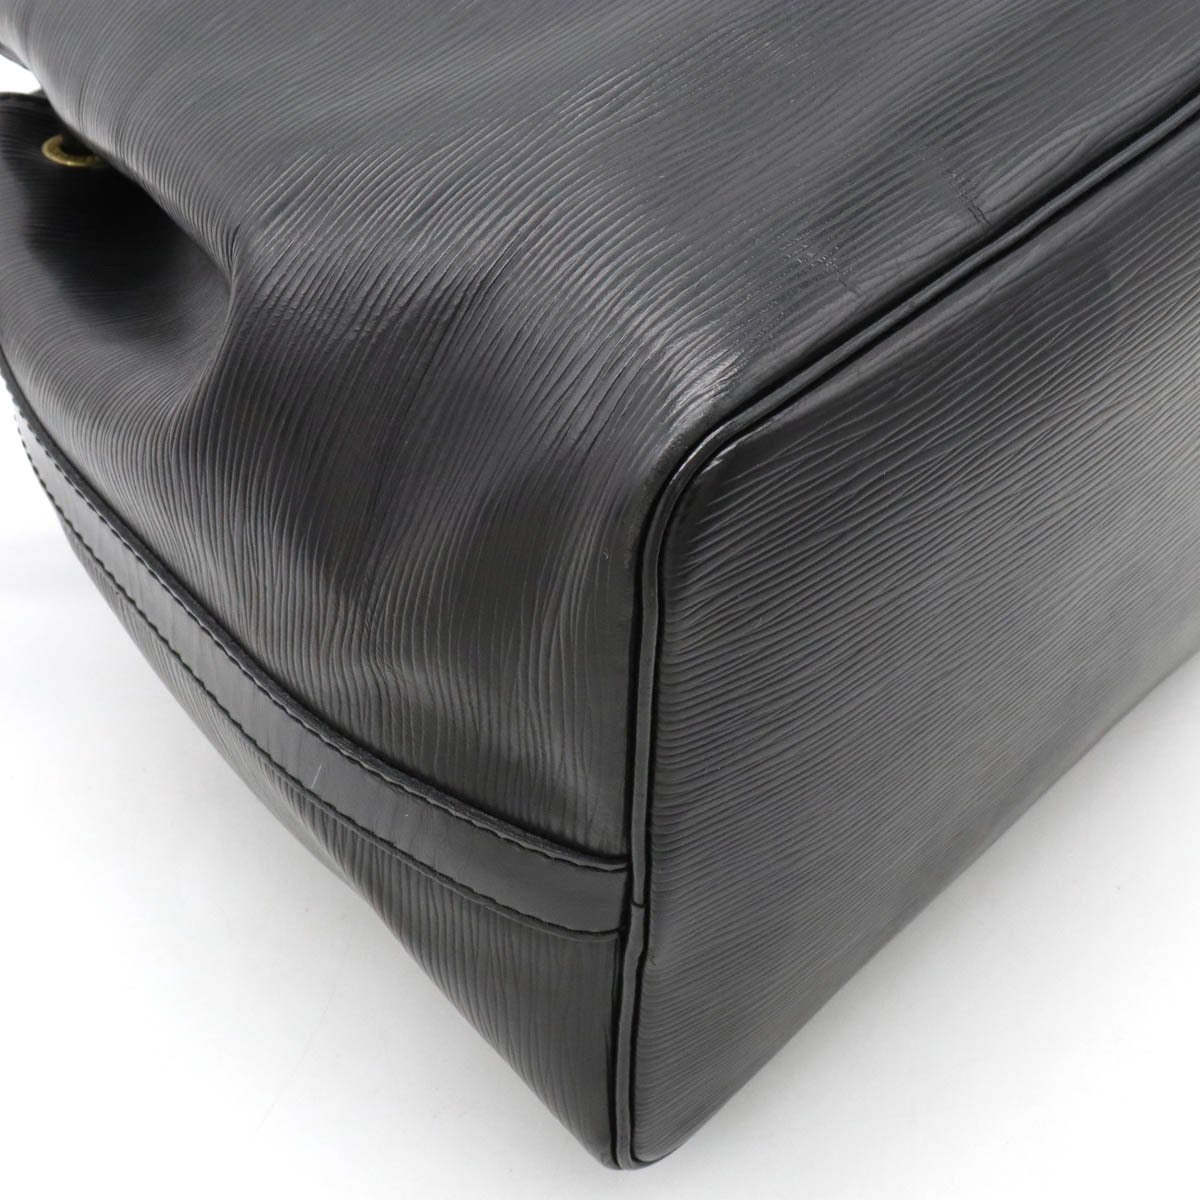 Heritage Vintage: Louis Vuitton Black Epi Leather One Strap Sac a